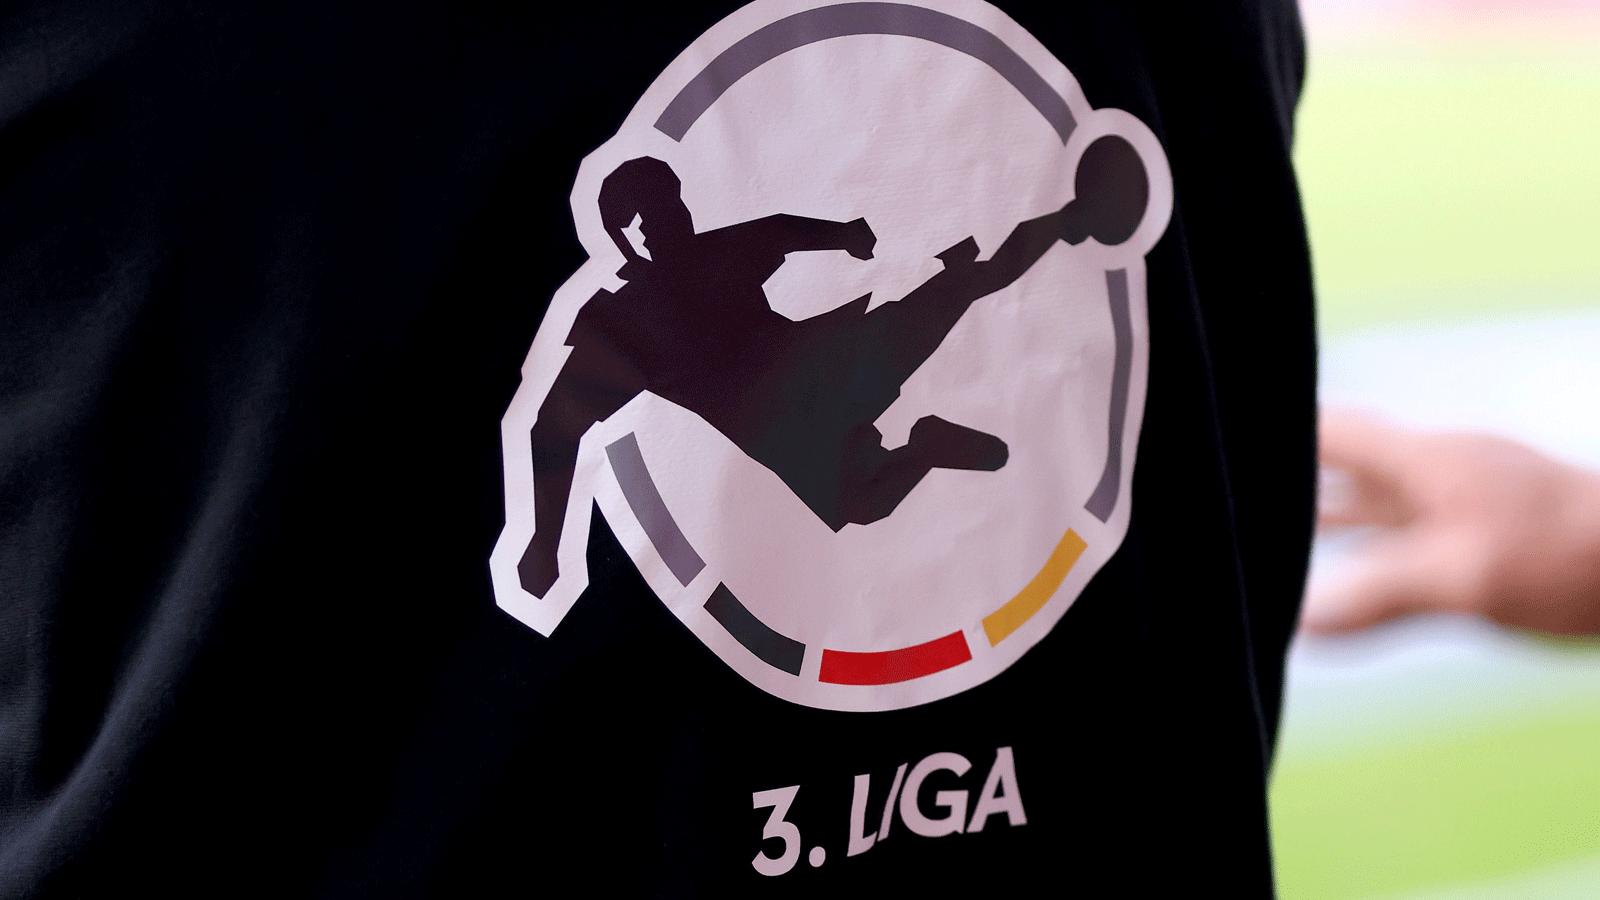 3. Liga, Logo